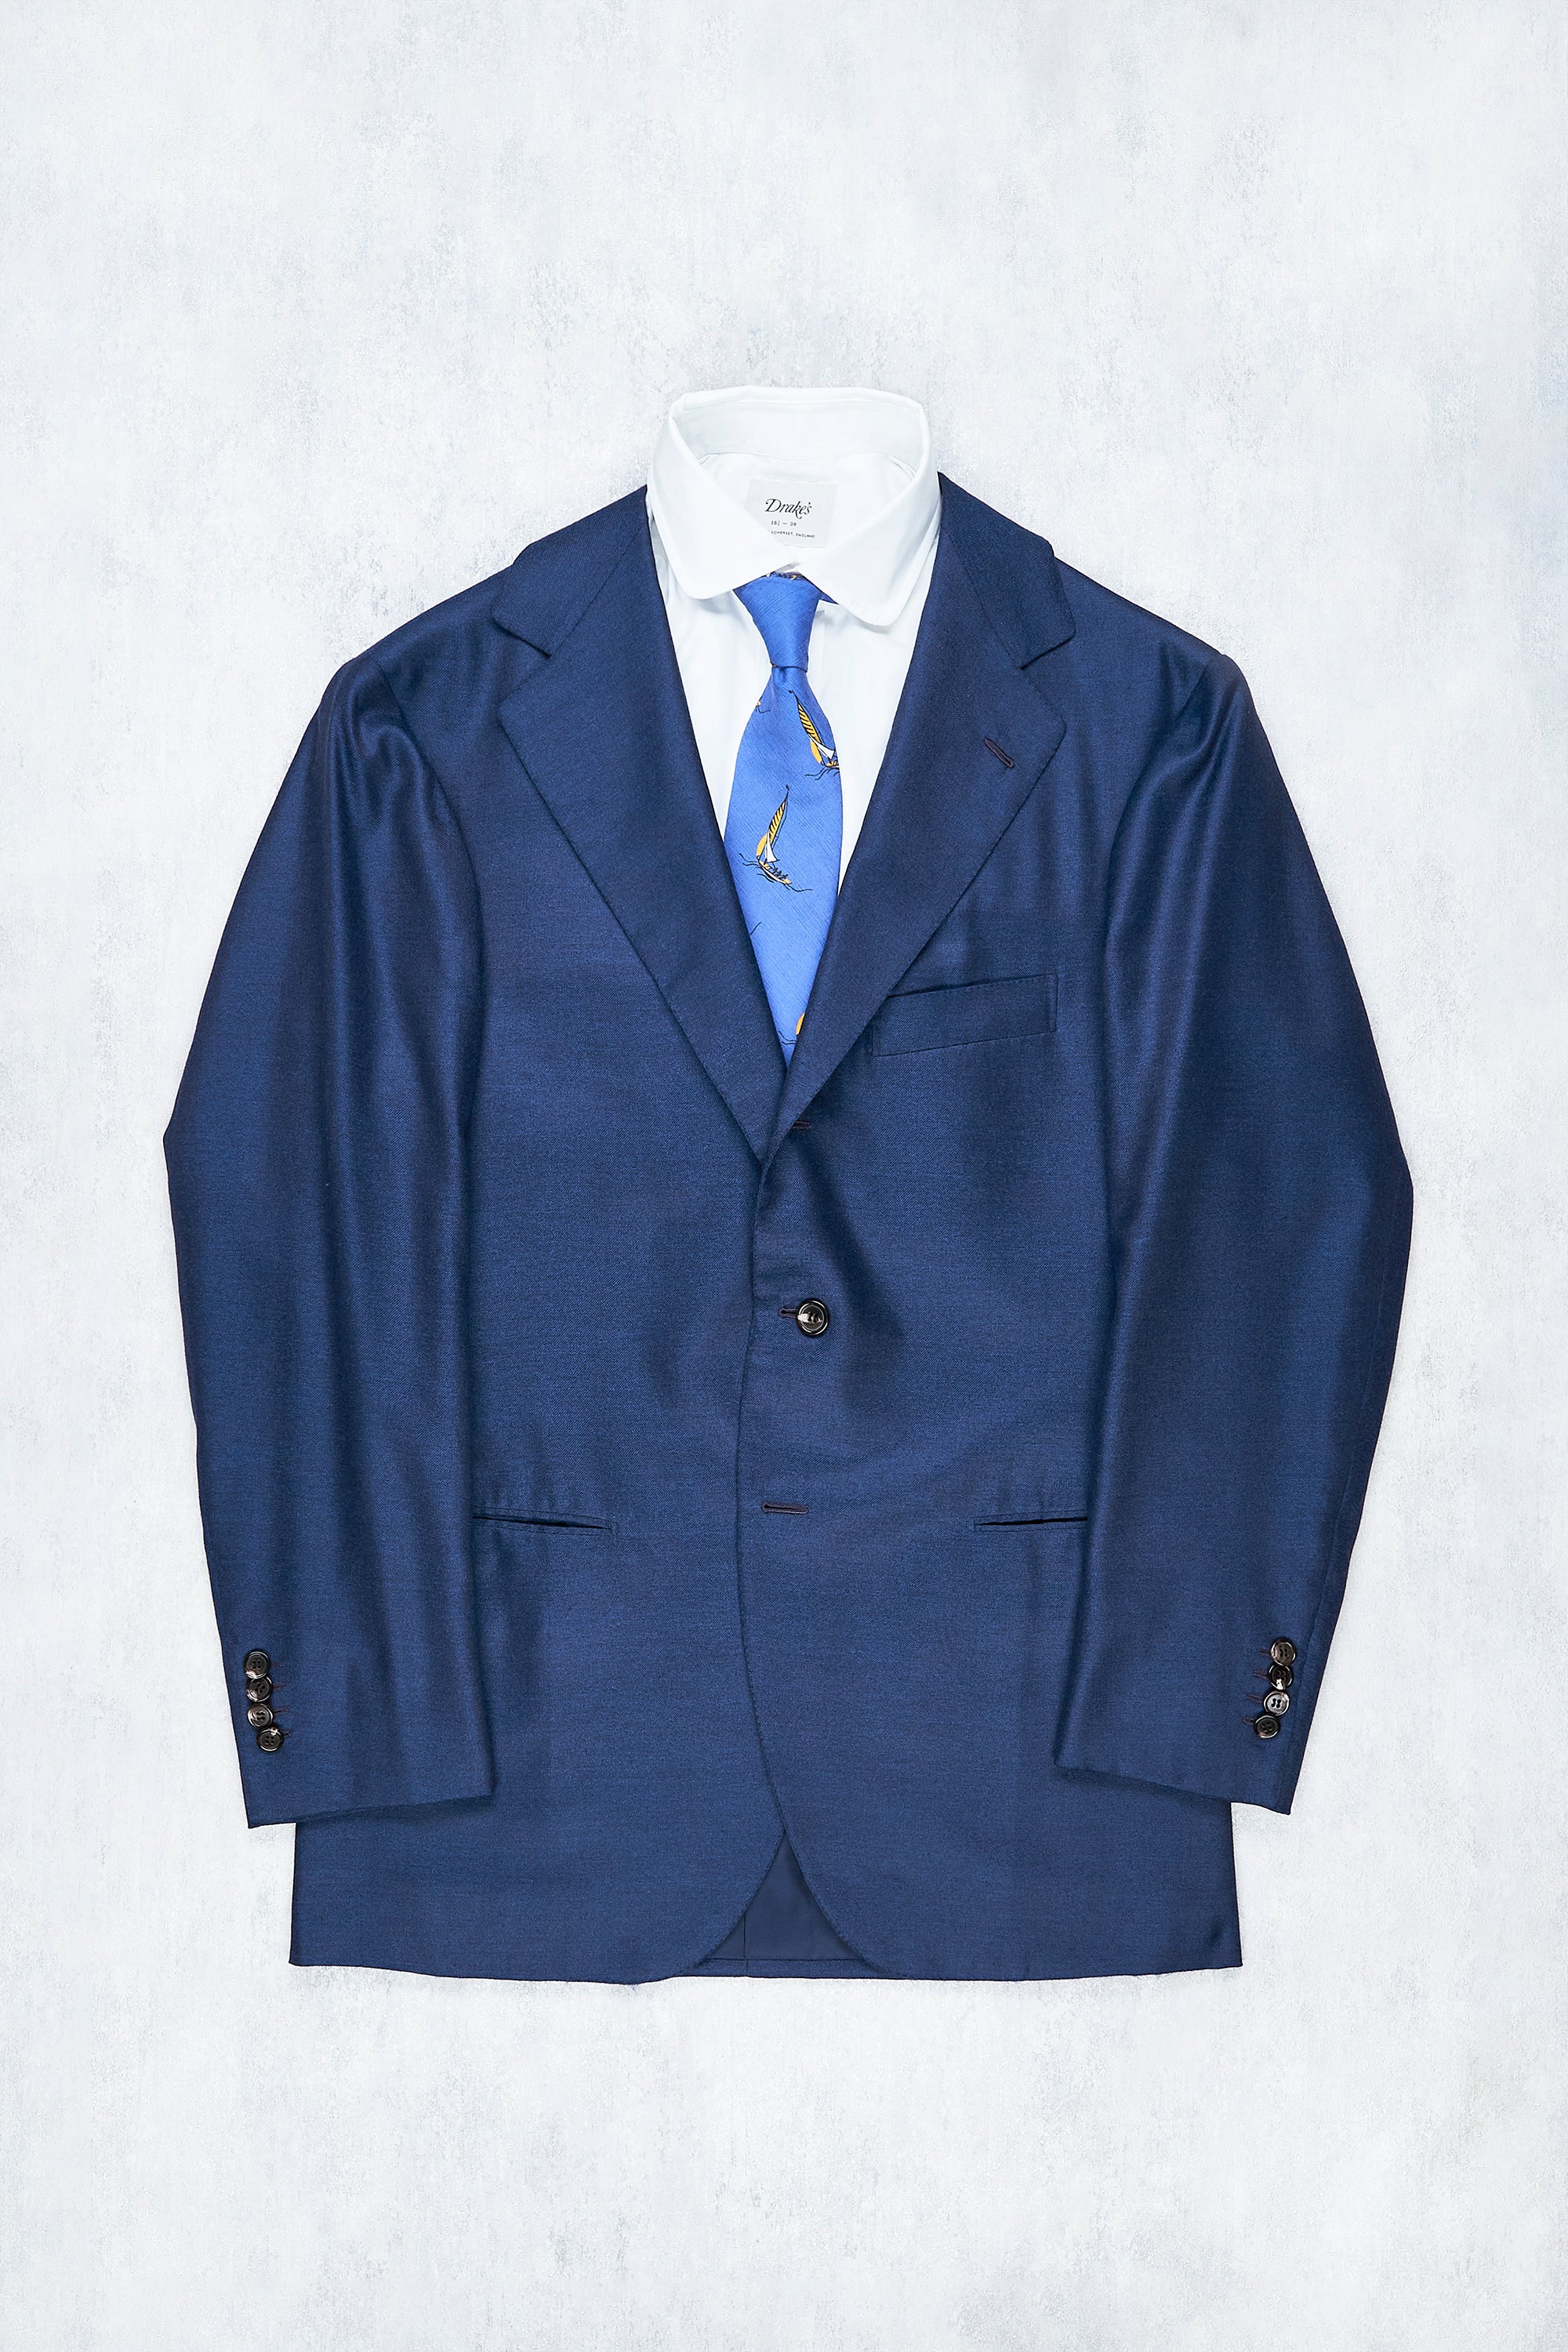 Liverano & Liverano Blue Twill Wool/Cashmere Sport Coat Bespoke